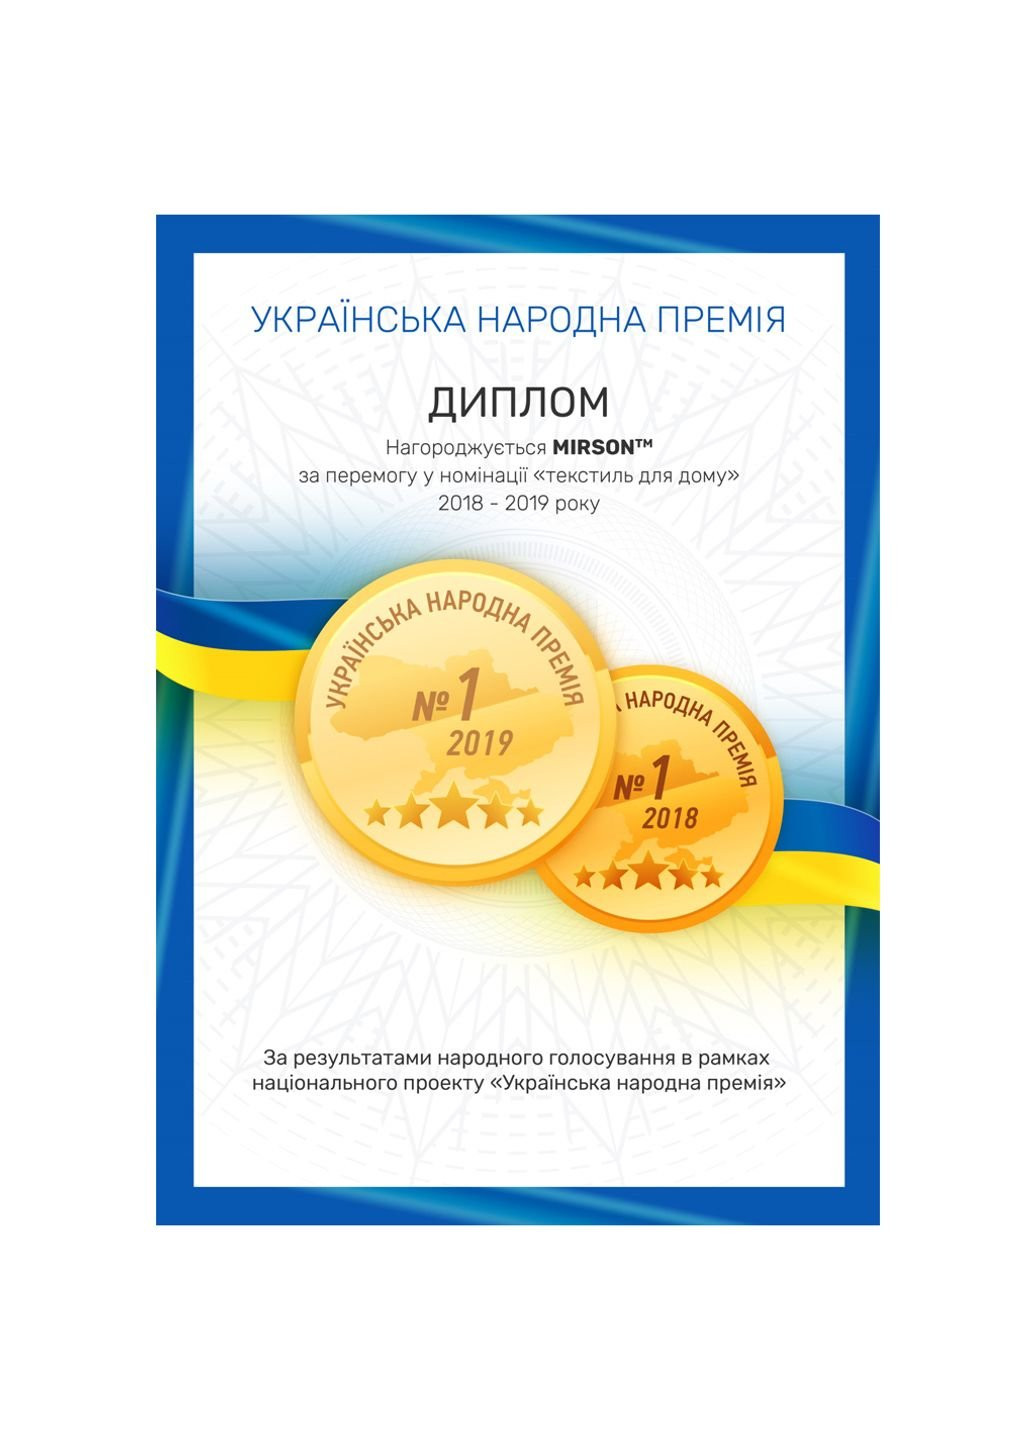 Mirson полотенце банное №5000 softness bordo 70x140 см (2200003182149) красный производство - Украина